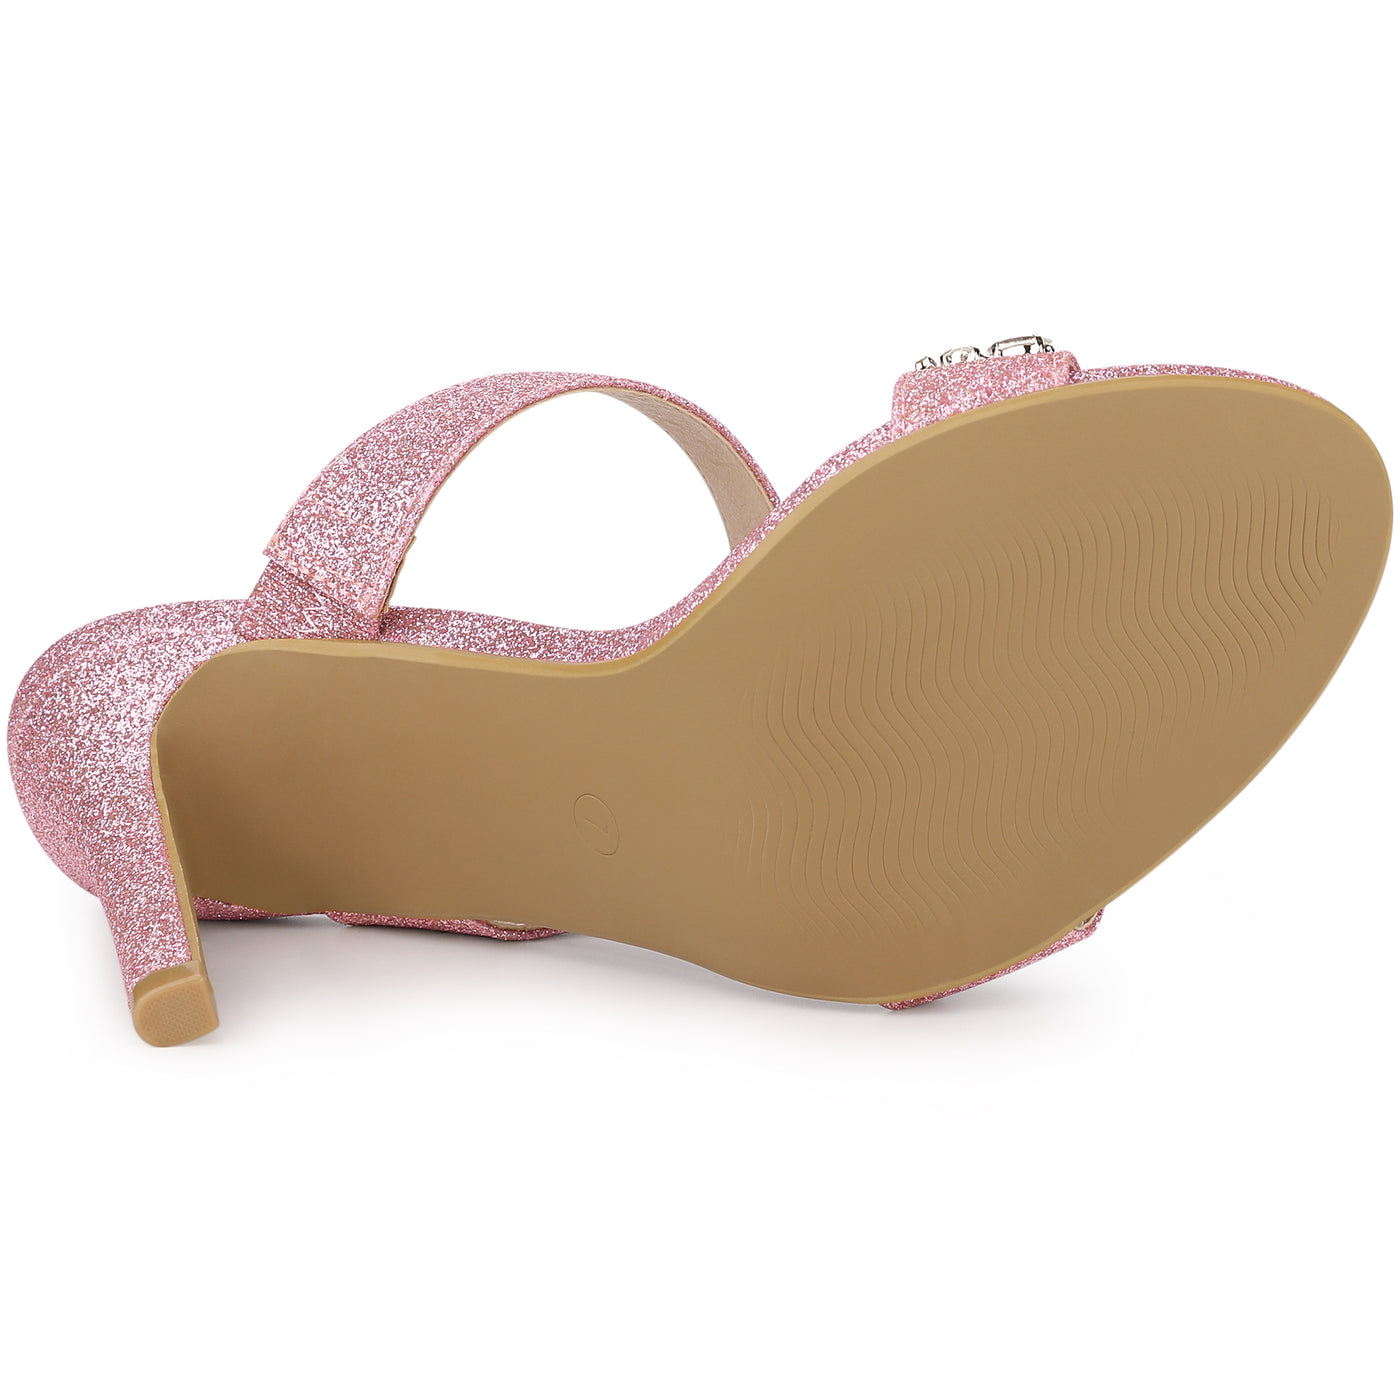 Allegra K Open Toe Glitter Rhinestone Decor Stiletto Heel Sandals